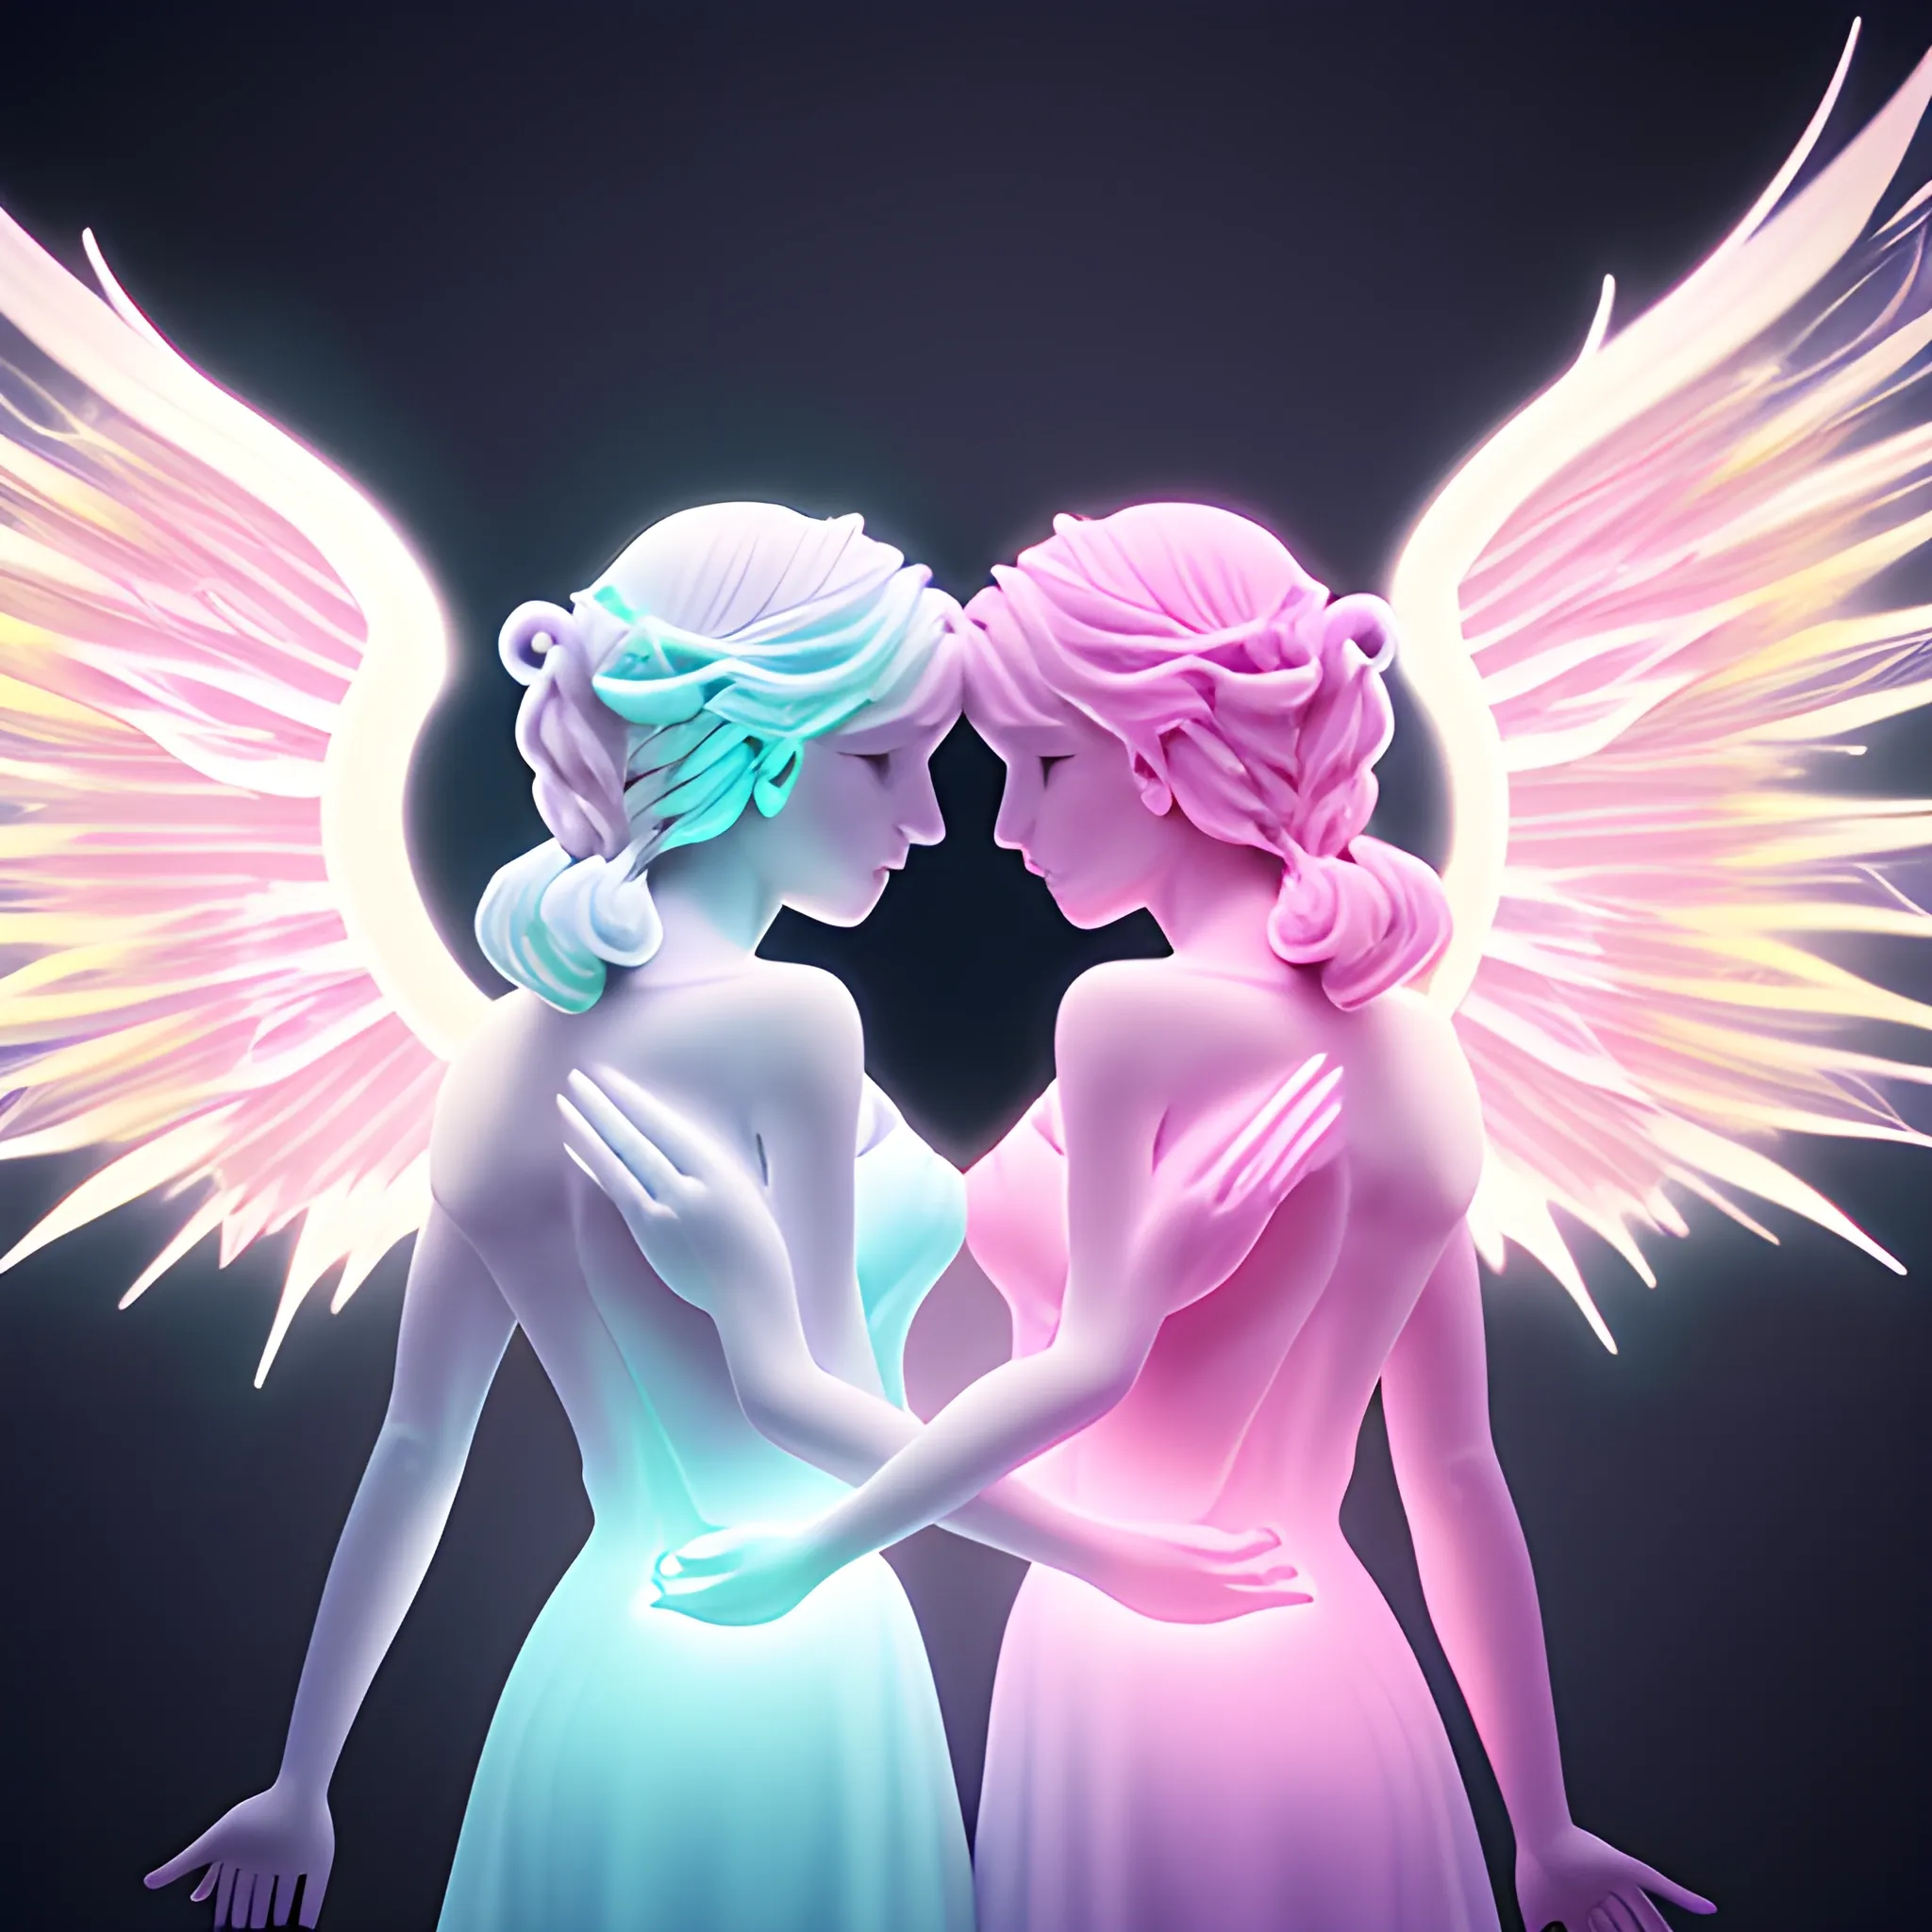 ethical dilemma light angel one one shoulder and dark demon on the other shoulder, 8k, pastel colors